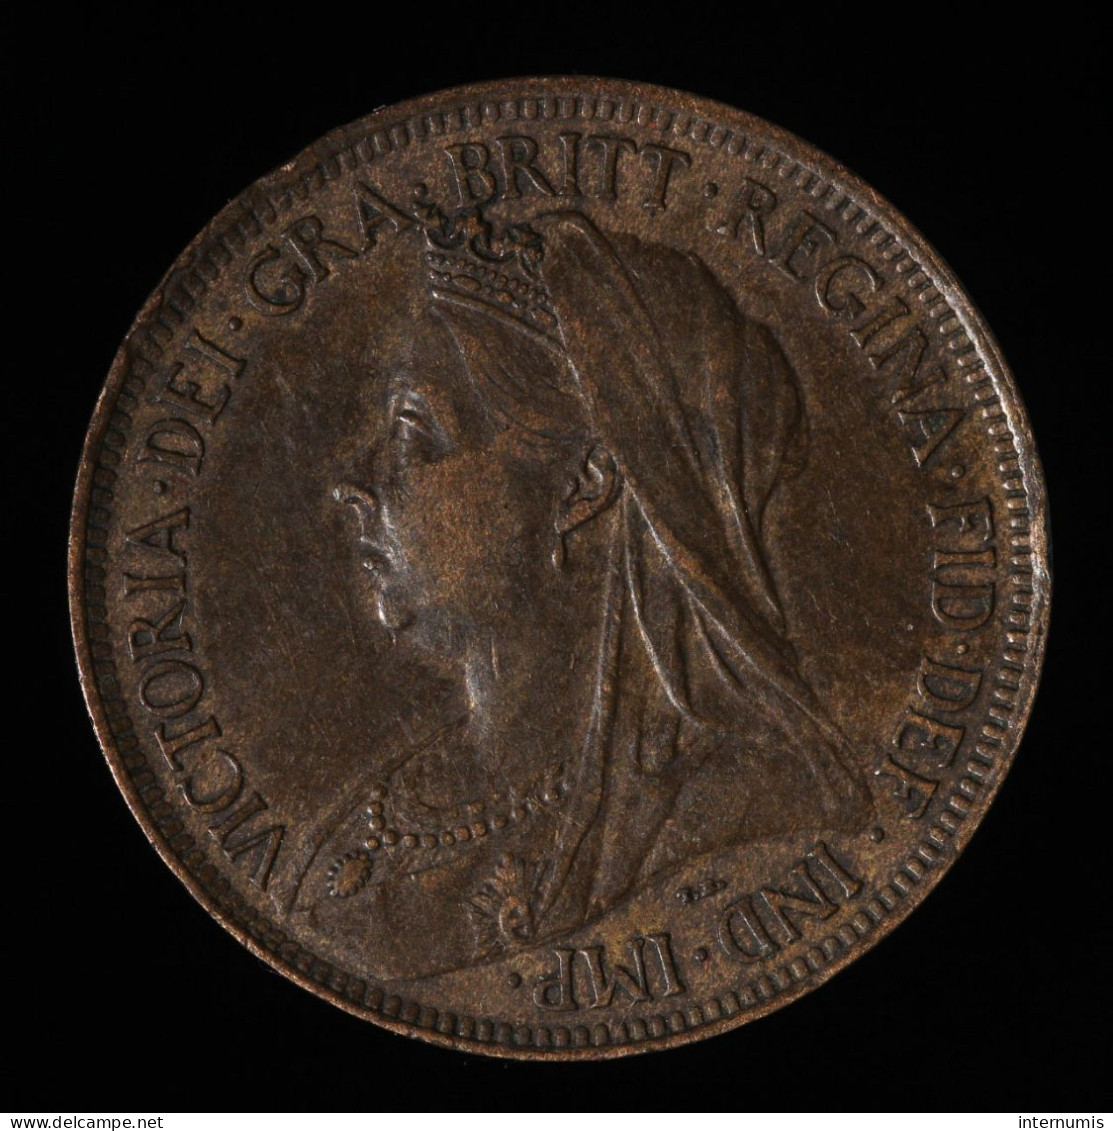  Grande-Bretagne / United Kingdom, Victoria, Half Penny, 1901, , Bronze, TTB+ (AU),
KM#789 - C. 1/2 Penny